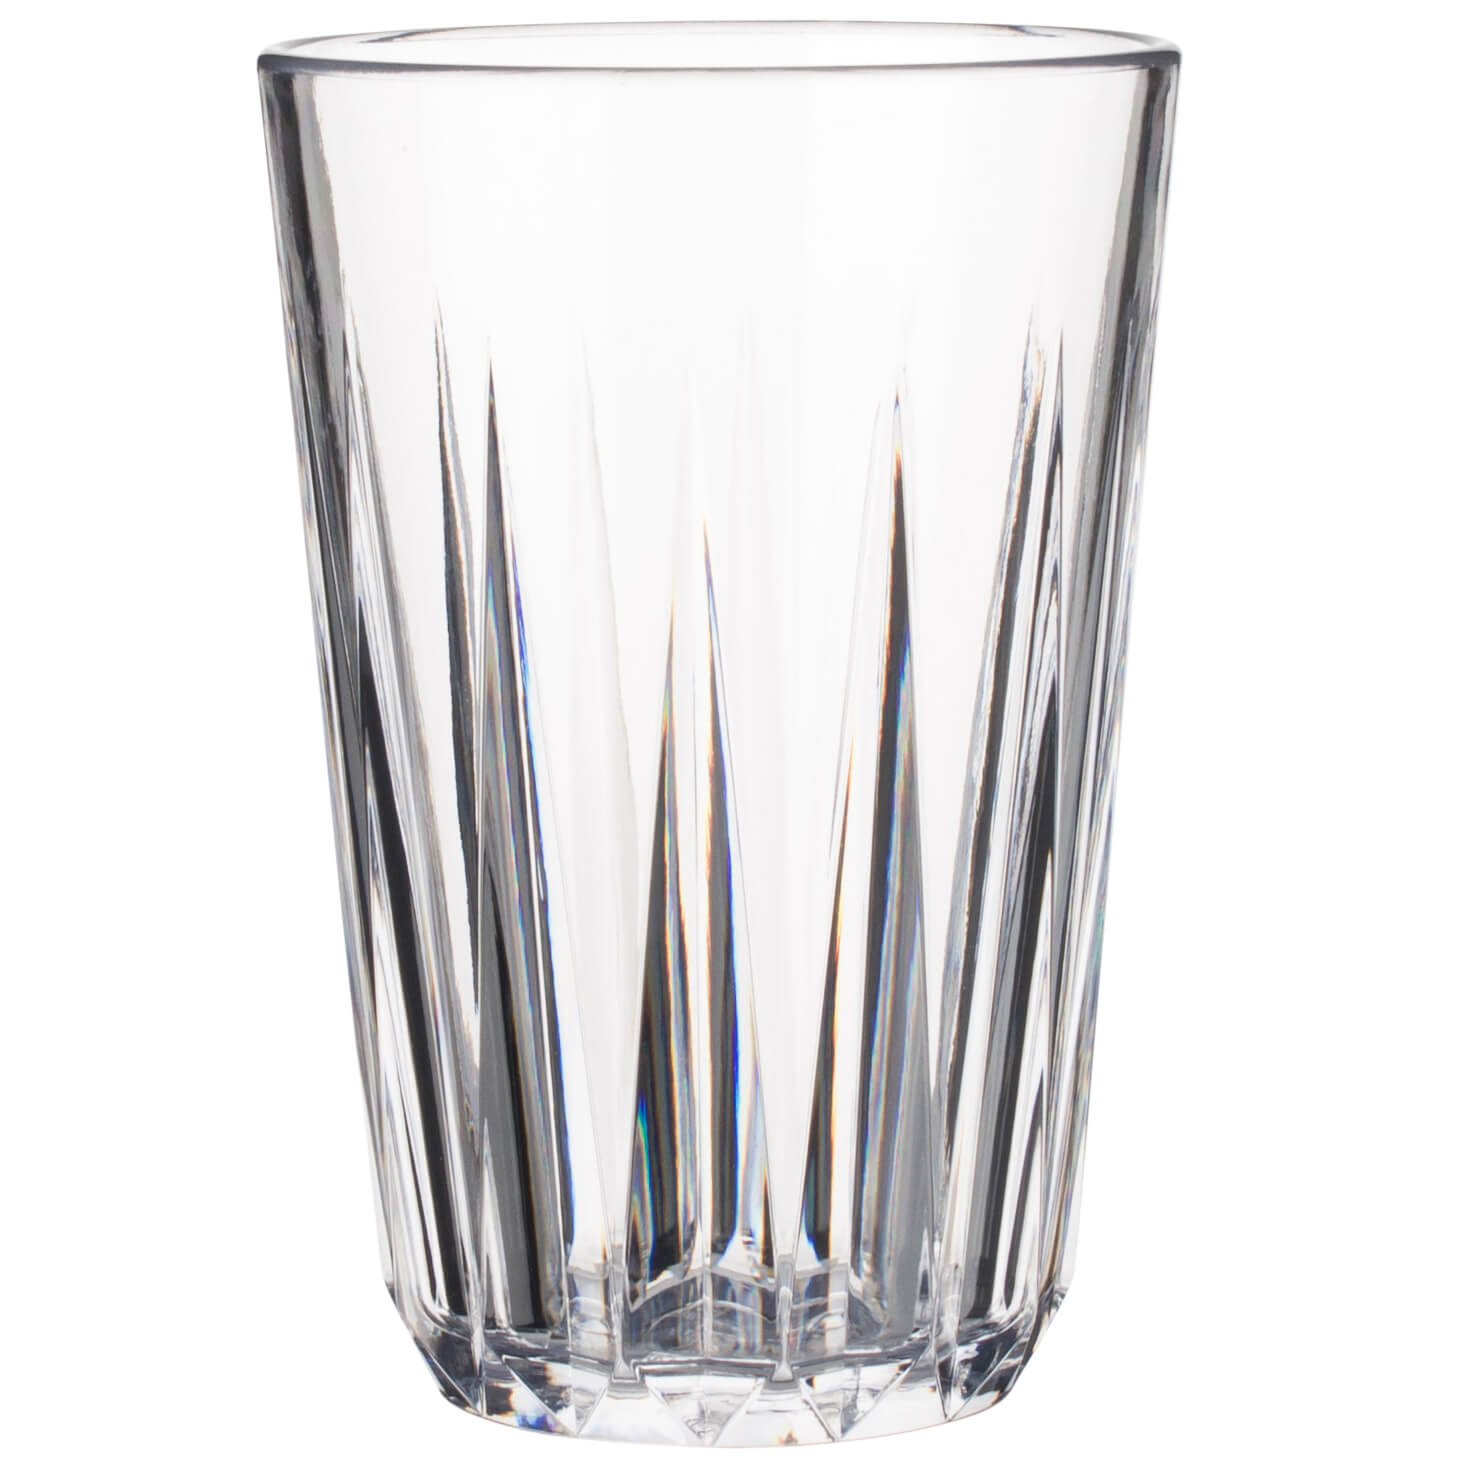 Trinkbecher Crystal, Kunststoff - 200ml (1 Stk.)